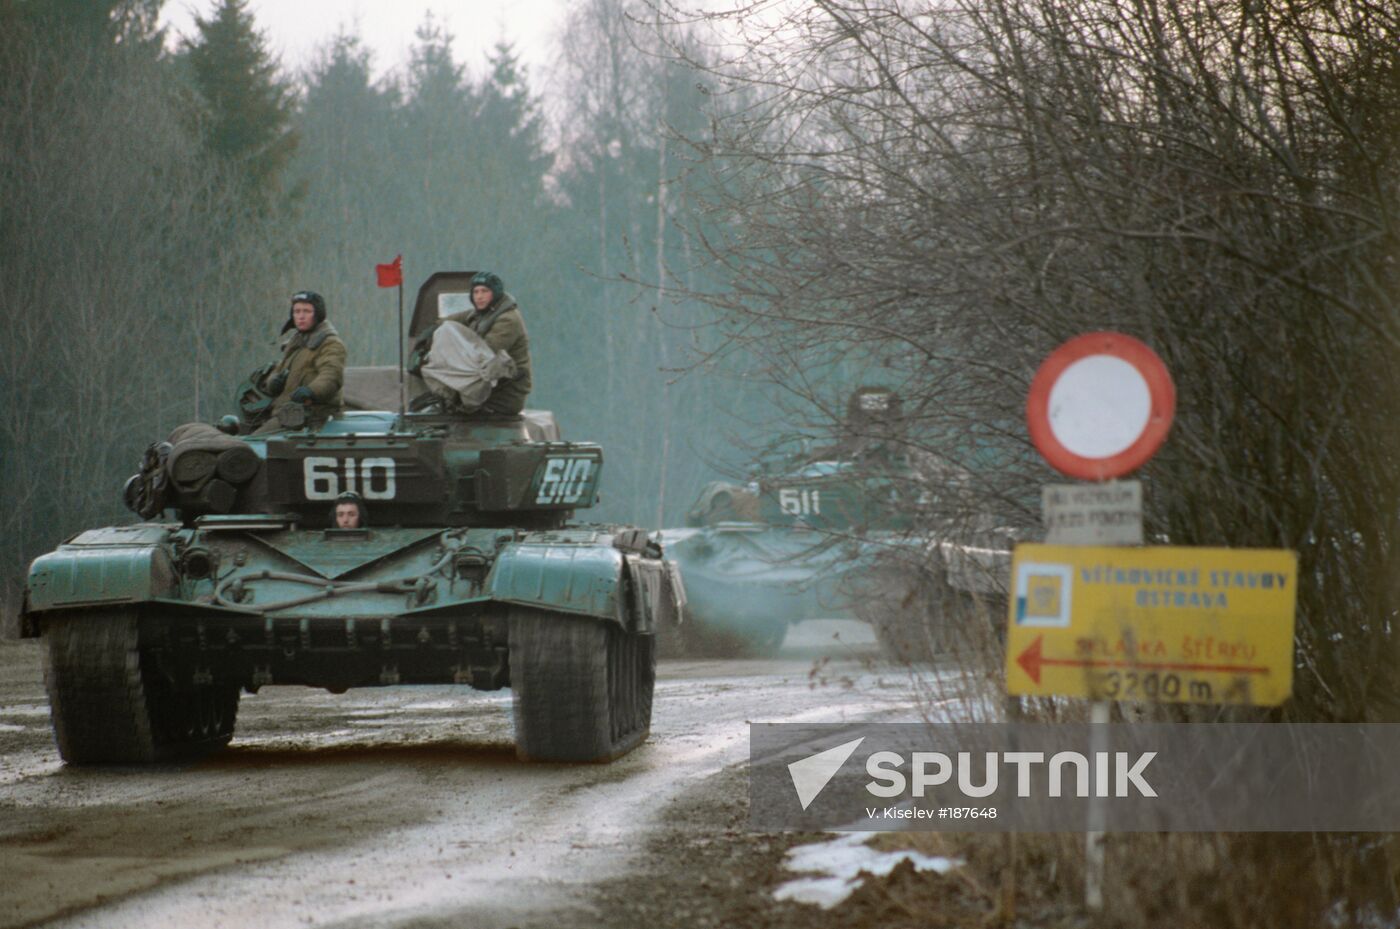 Czechoslovak Socialist Republic tanks withdrawal